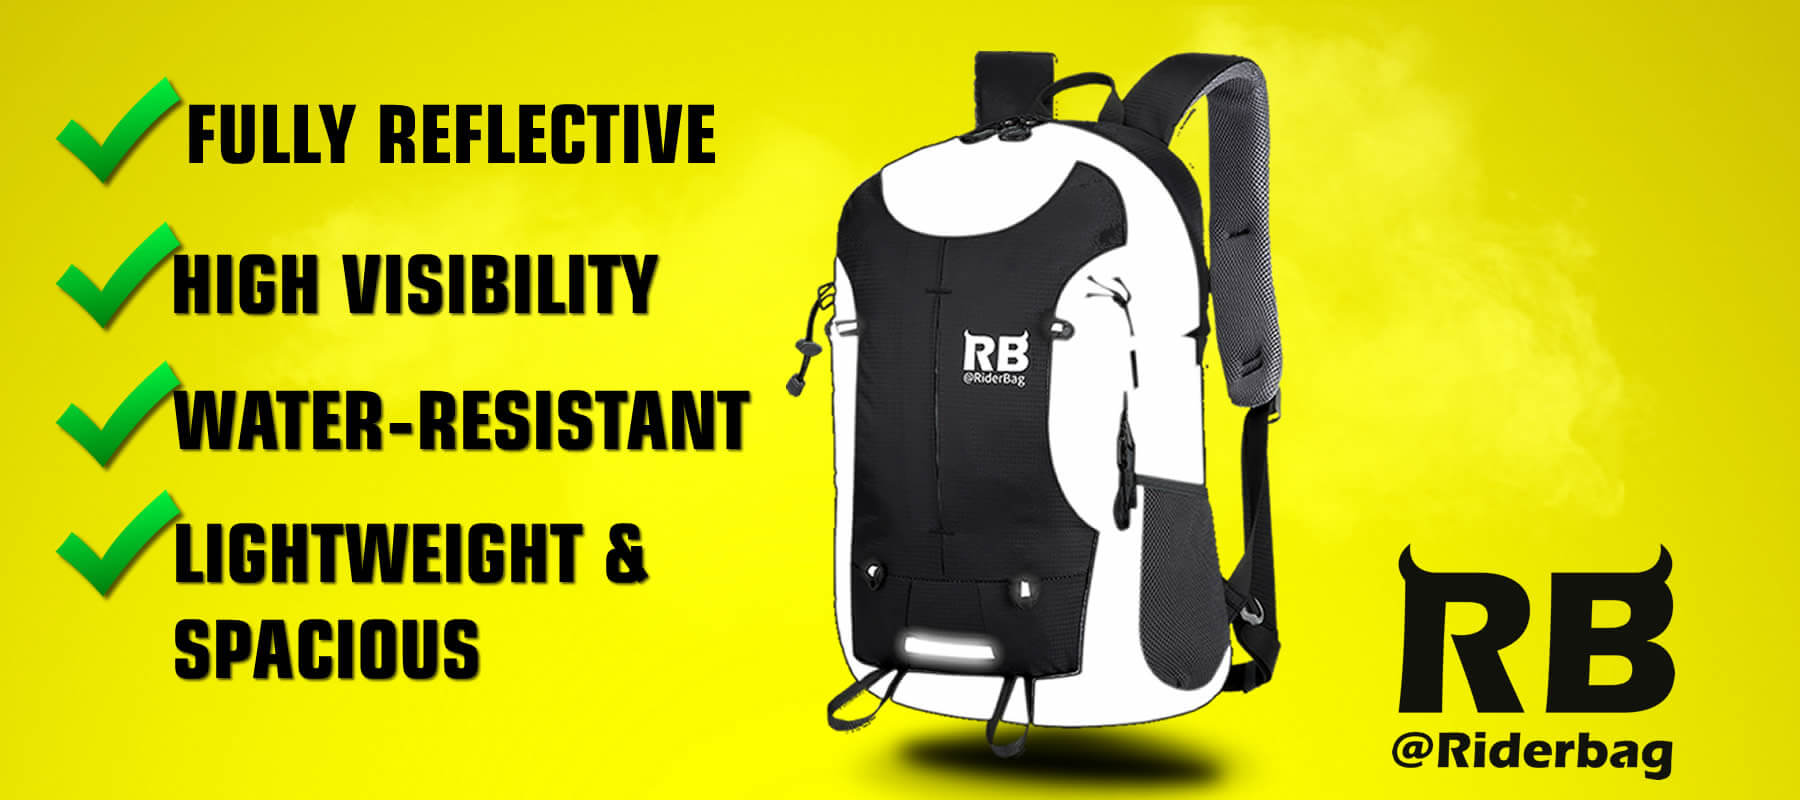 Reflective backpack, commuter bakpack, riderbag, rider bag, motorcycle backpack, cycling backpack, skateboard backpack